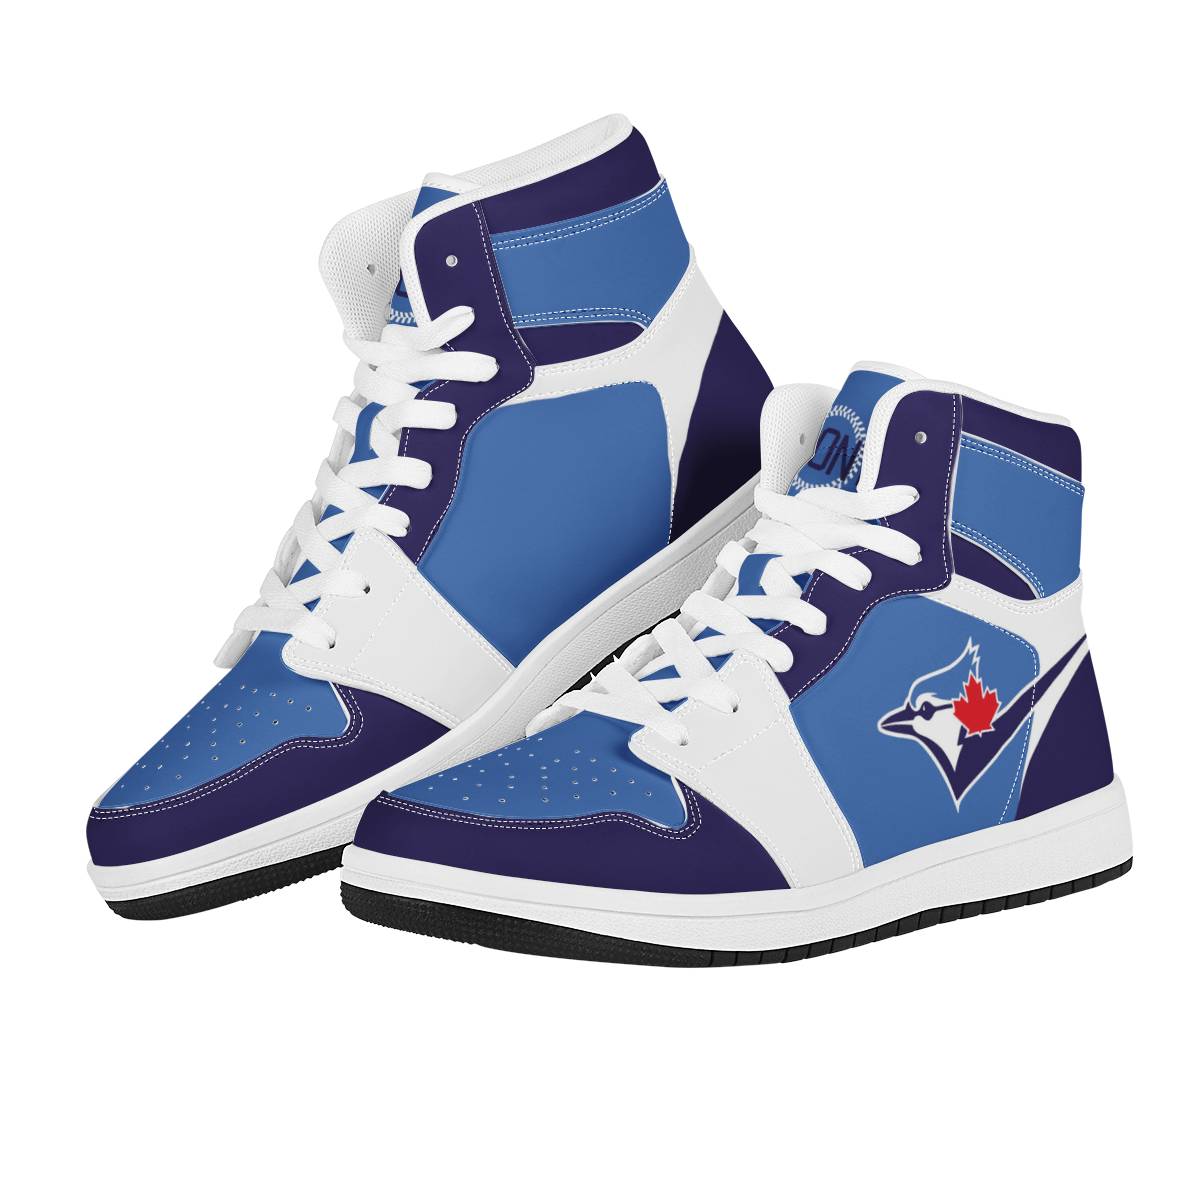 Men's Toronto Blue Jays High Top Leather AJ1 Sneakers 001